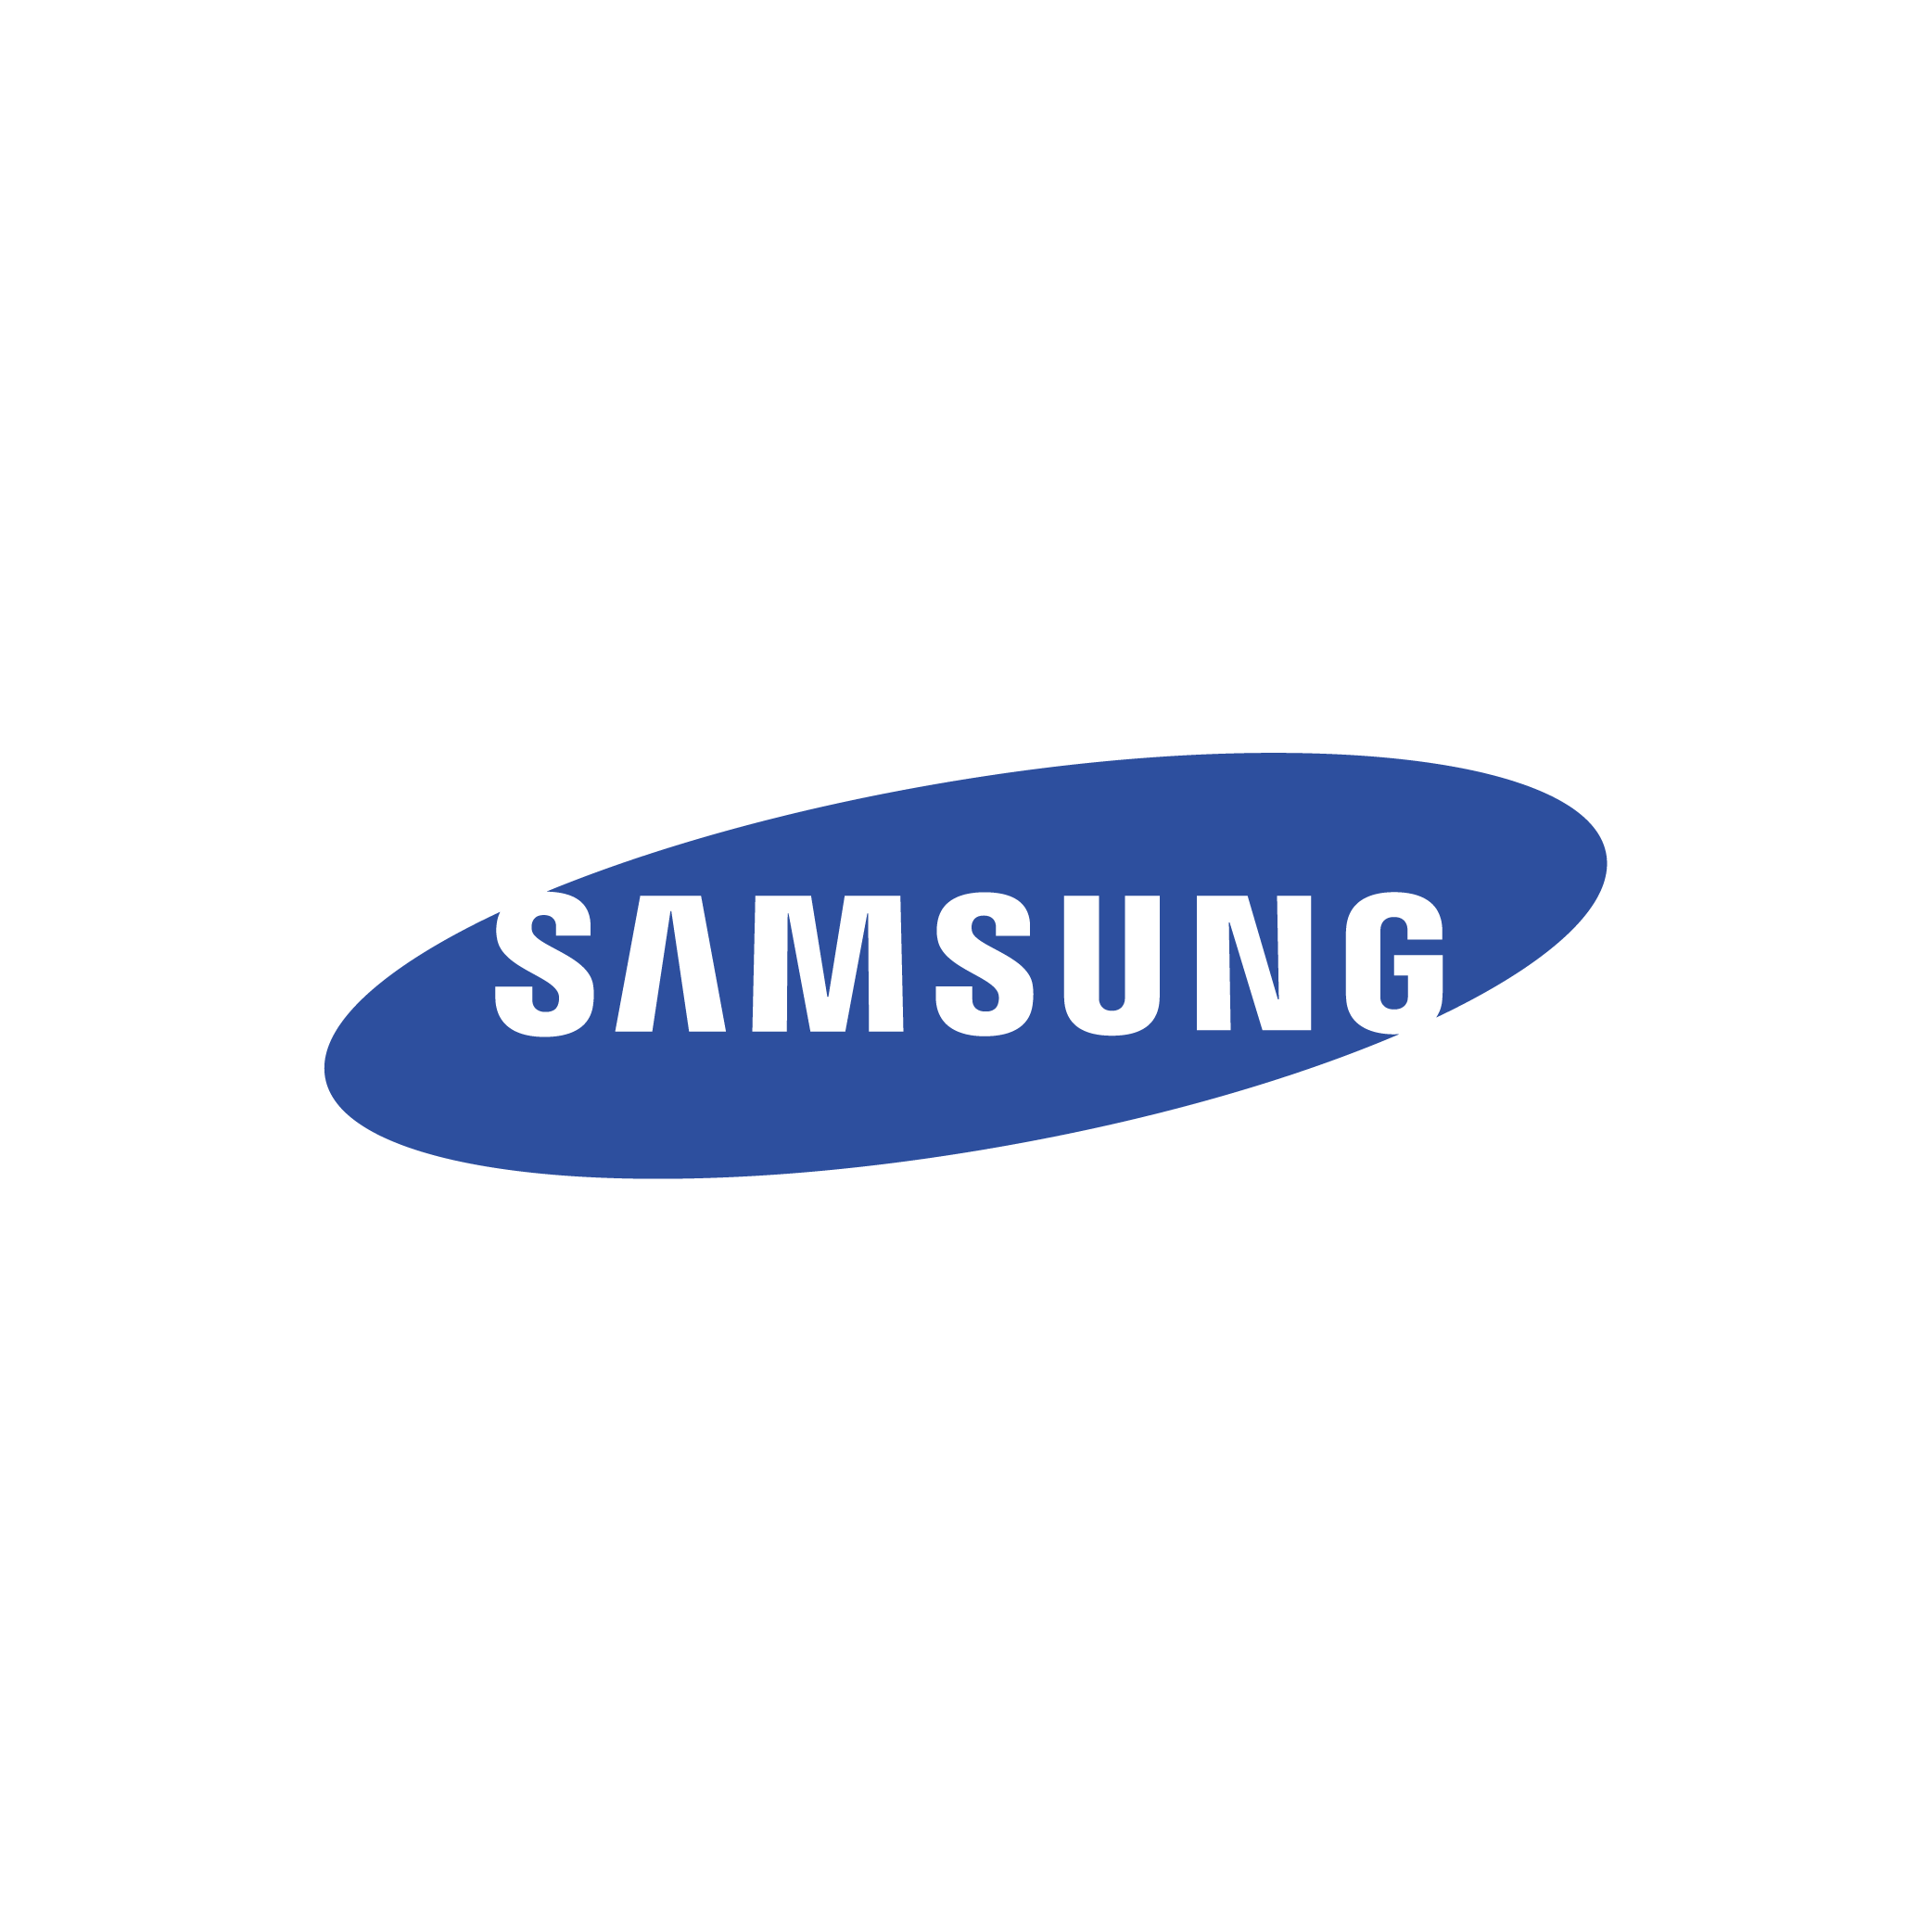  Samsung Logo 